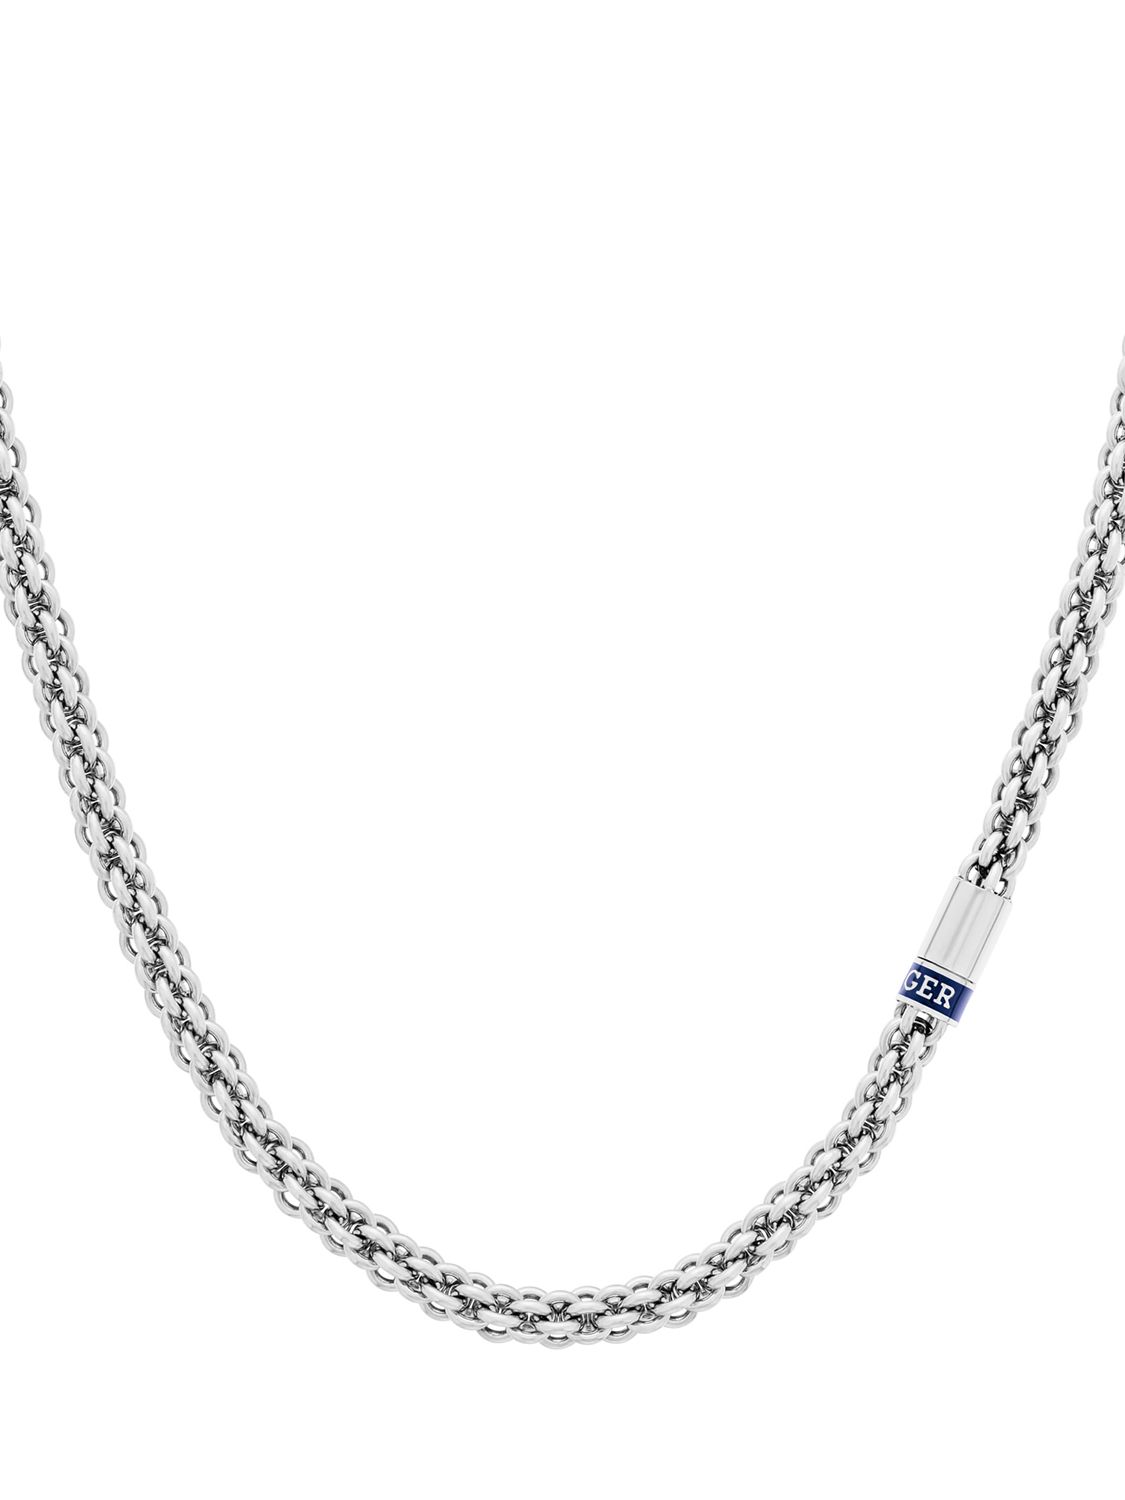 Buy Tommy Hilfiger Men's Interlinked Chain Necklace, Silver Online at johnlewis.com